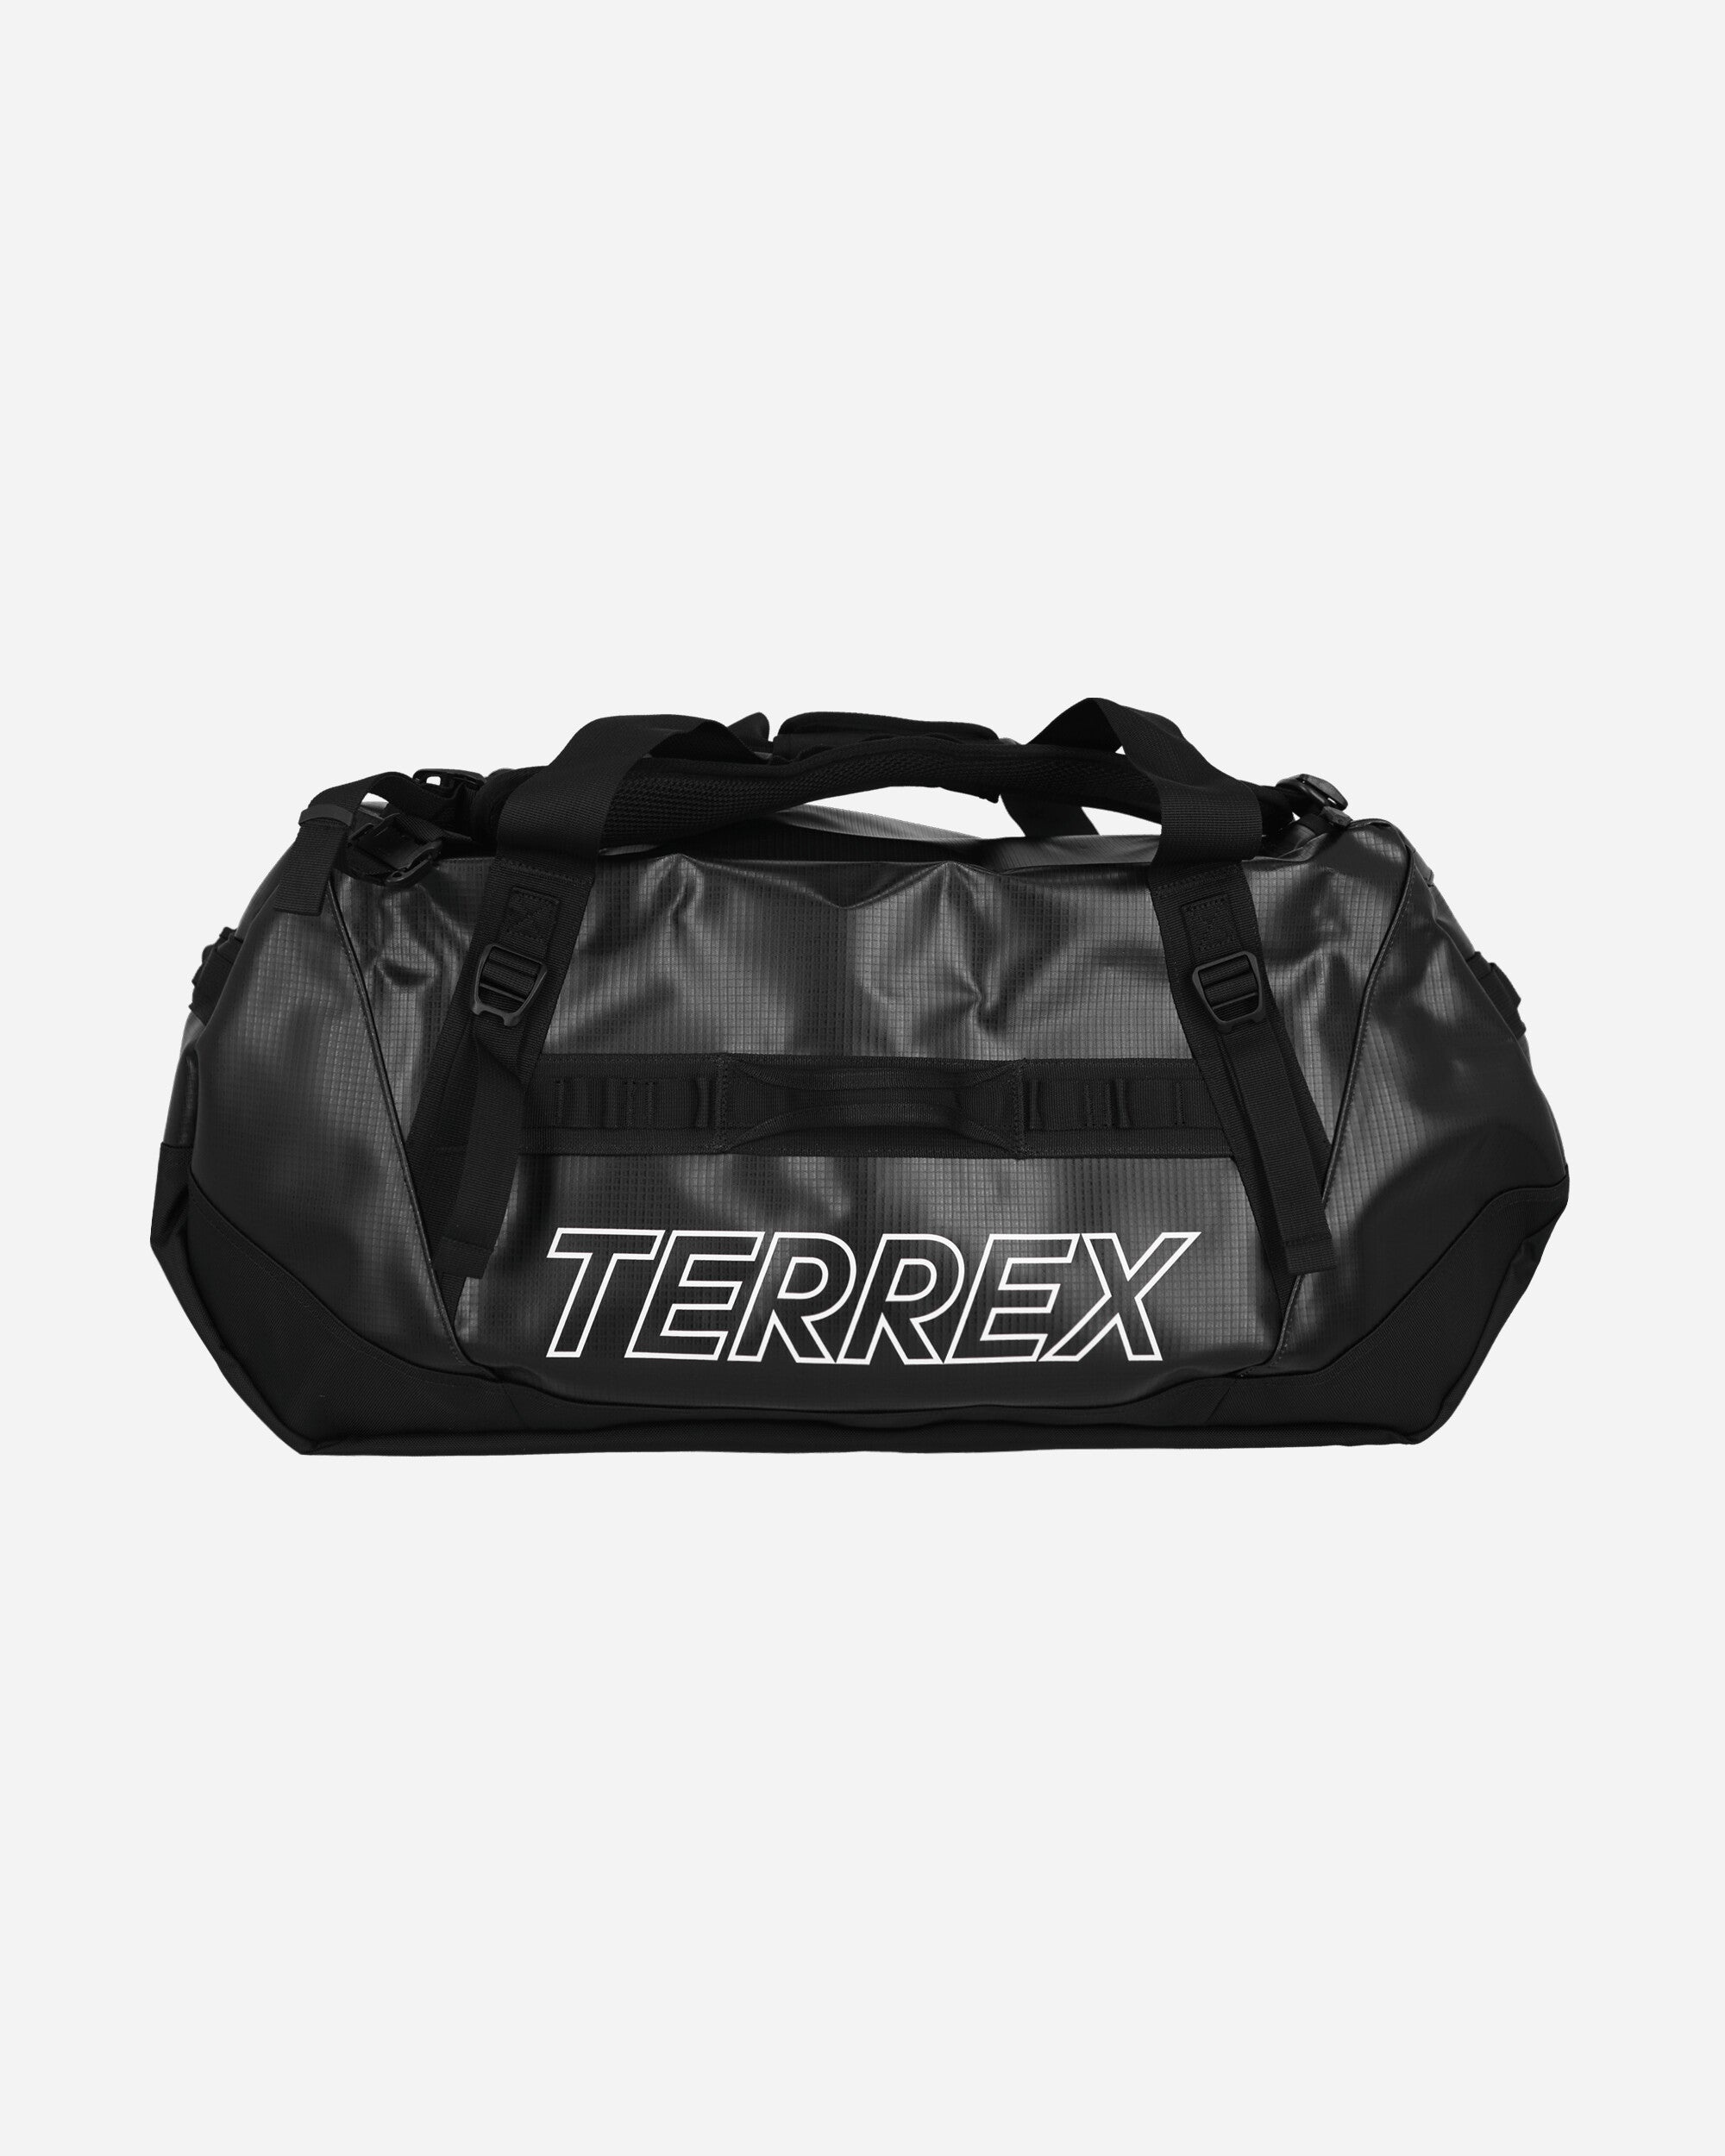 TERREX Expedition Duffel Bag Large Black - 4